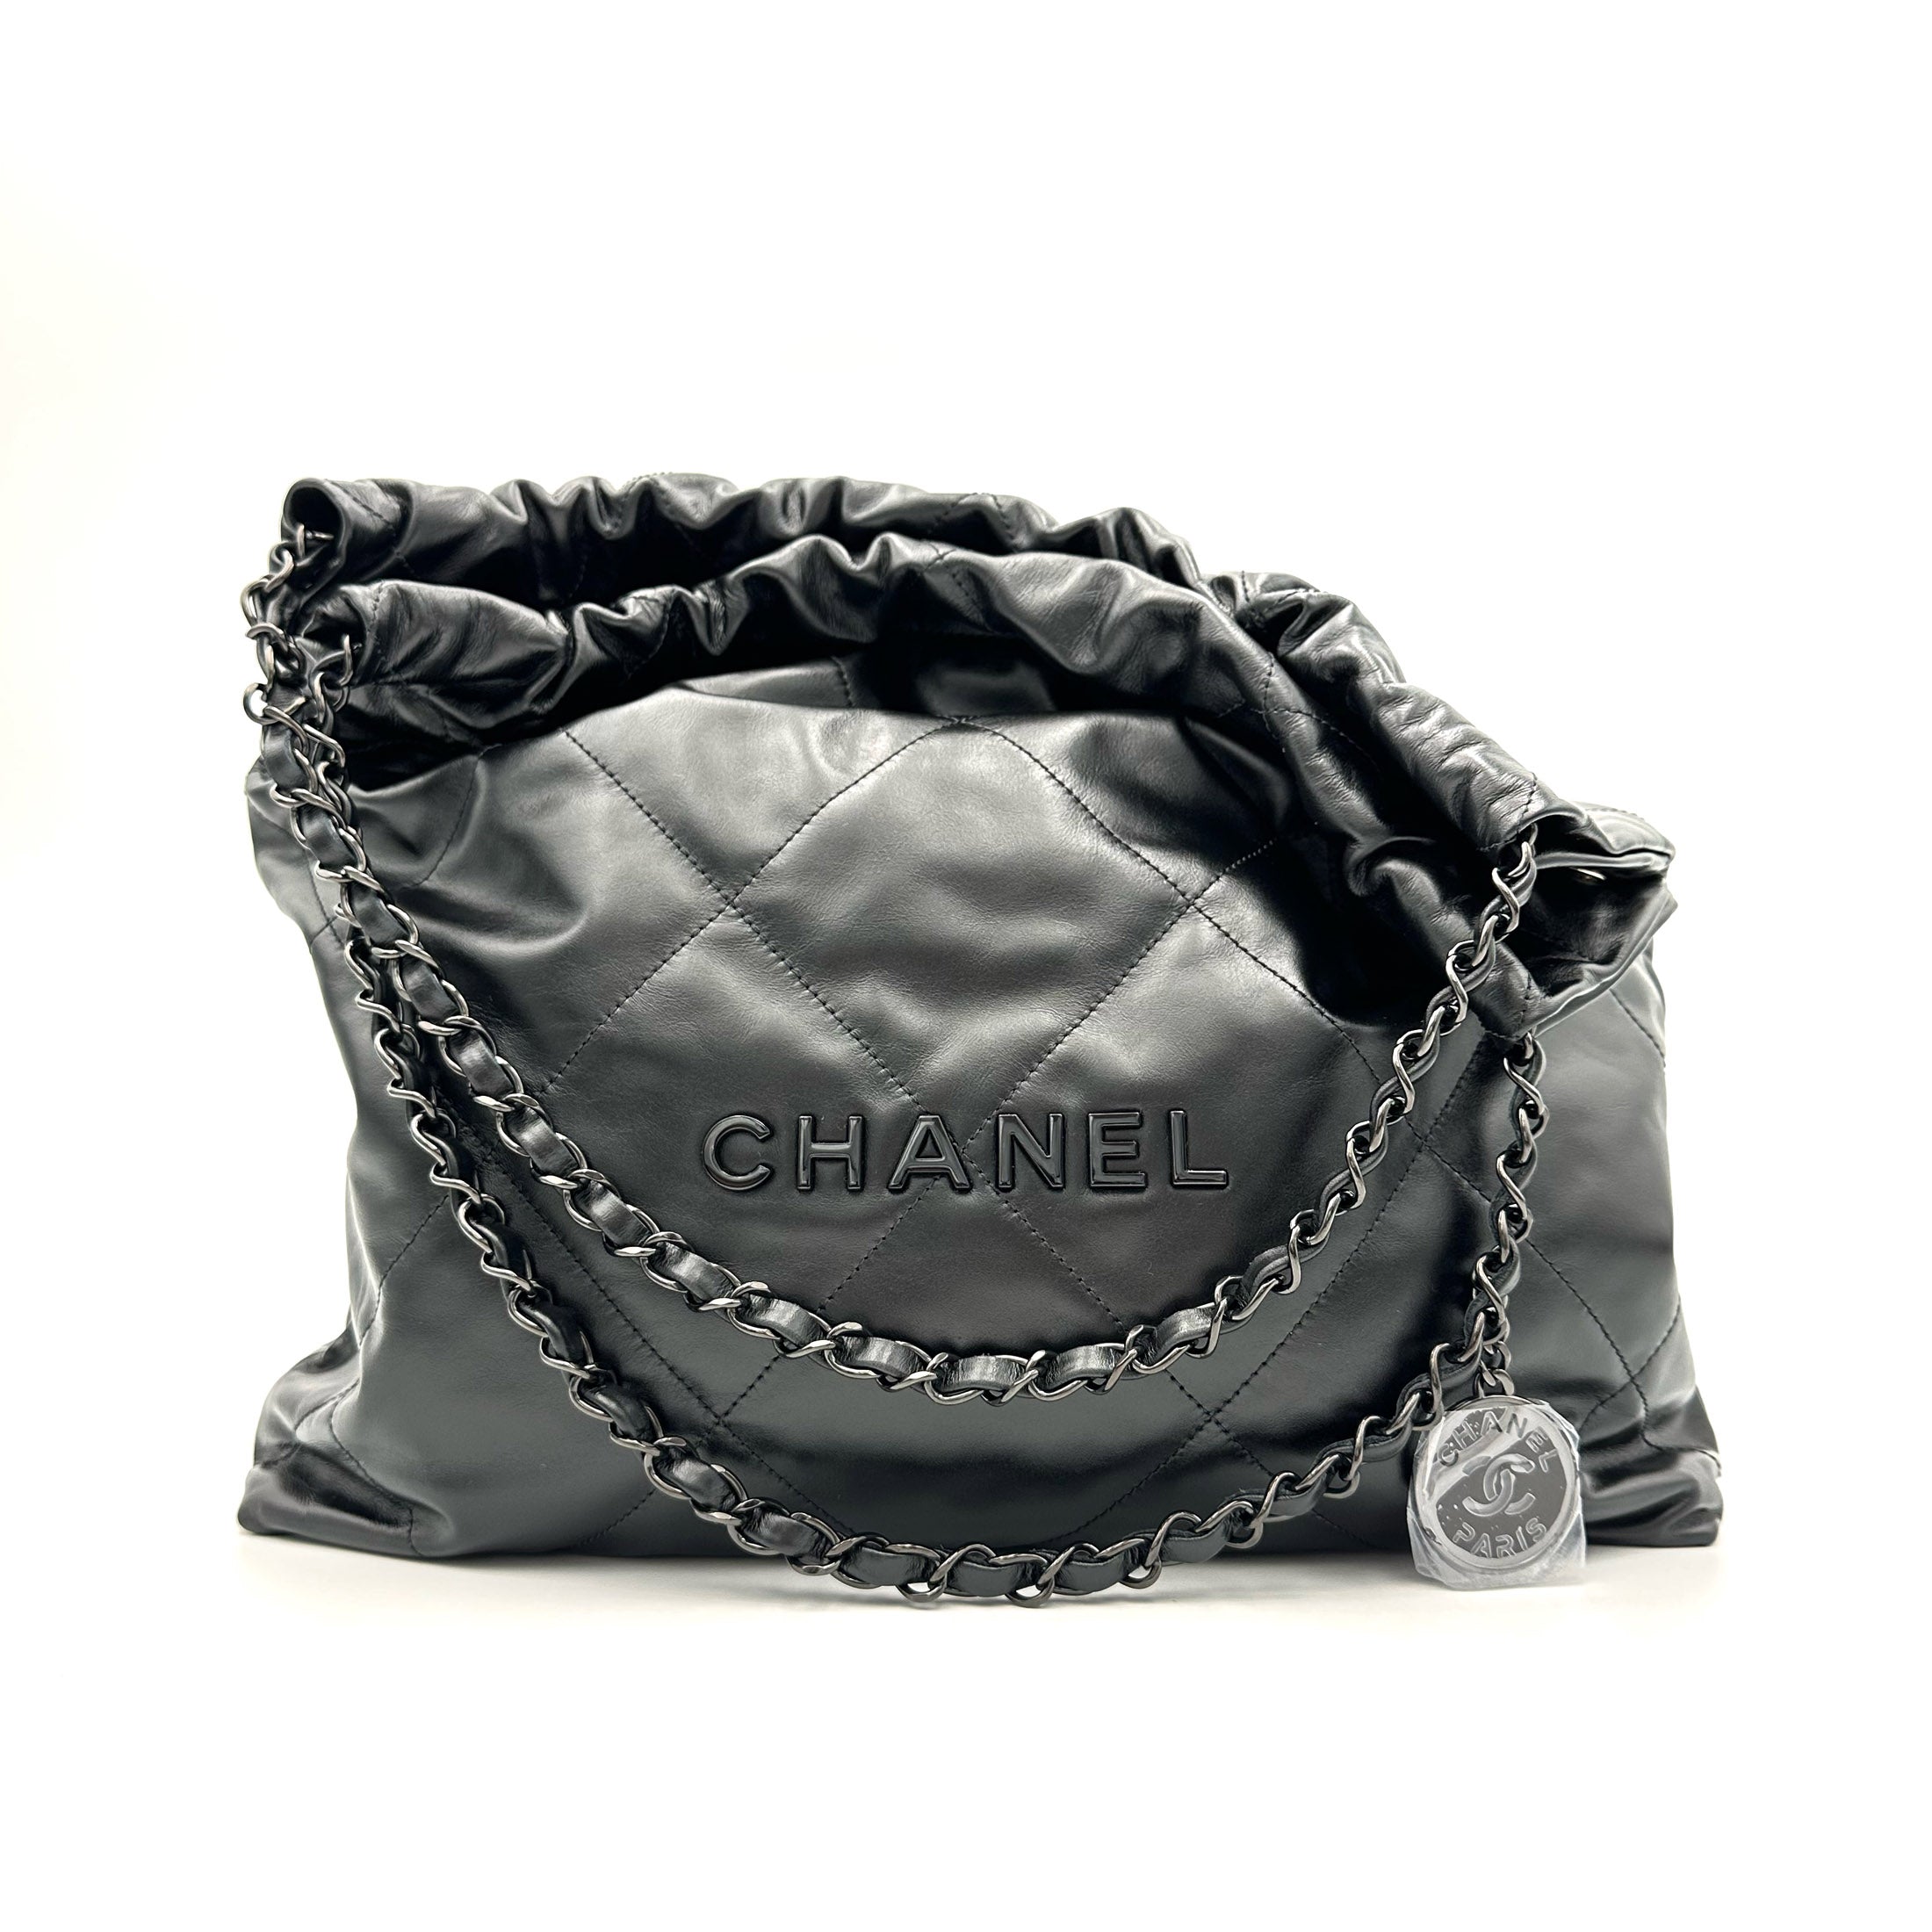 Chanel 22 Medium (SO Black) - Brand New